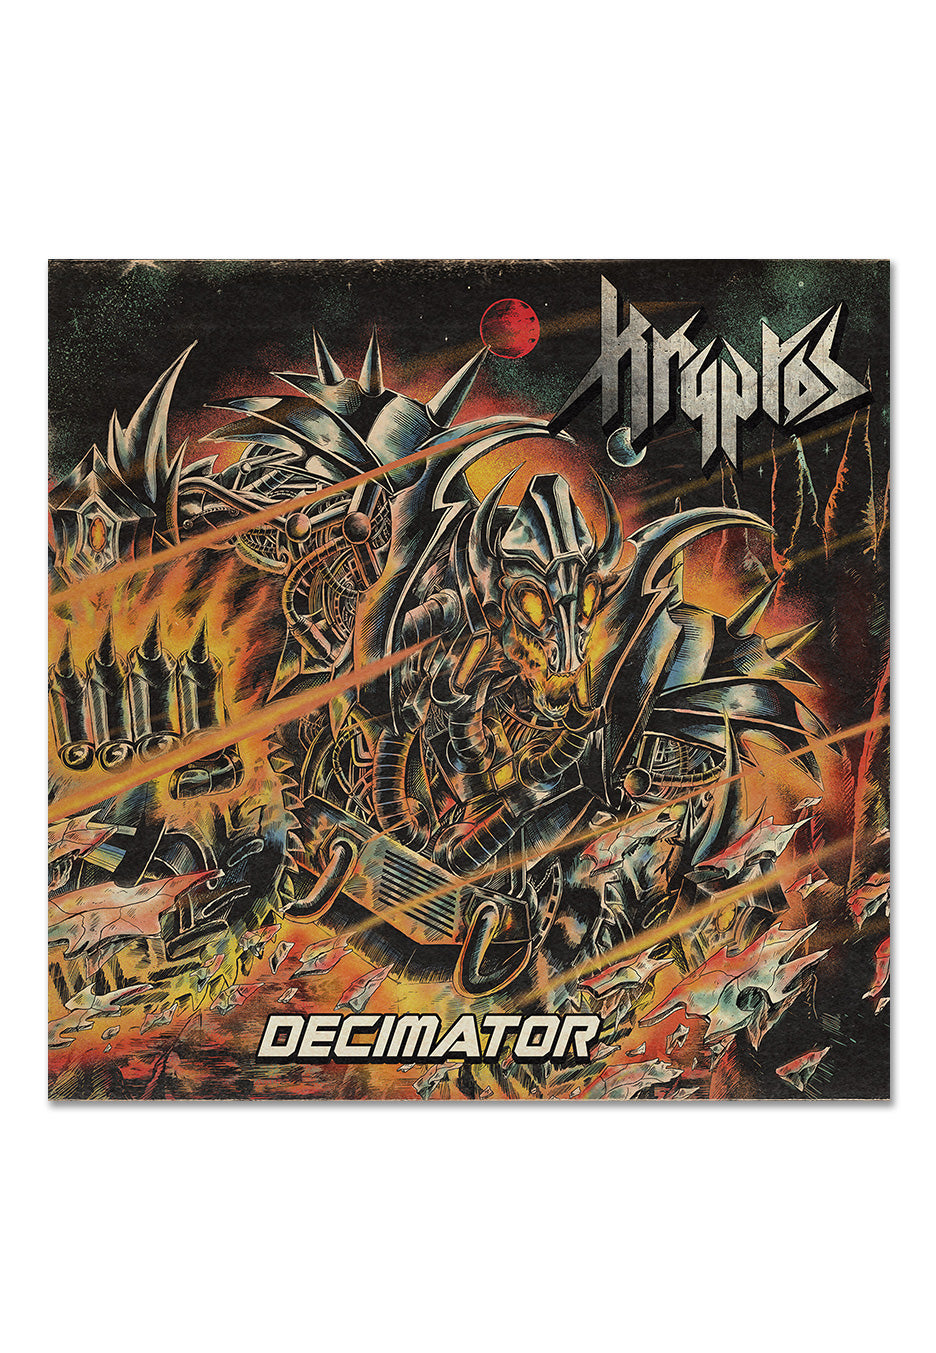 Kryptos - Decimator Ltd. Edition - Vinyl